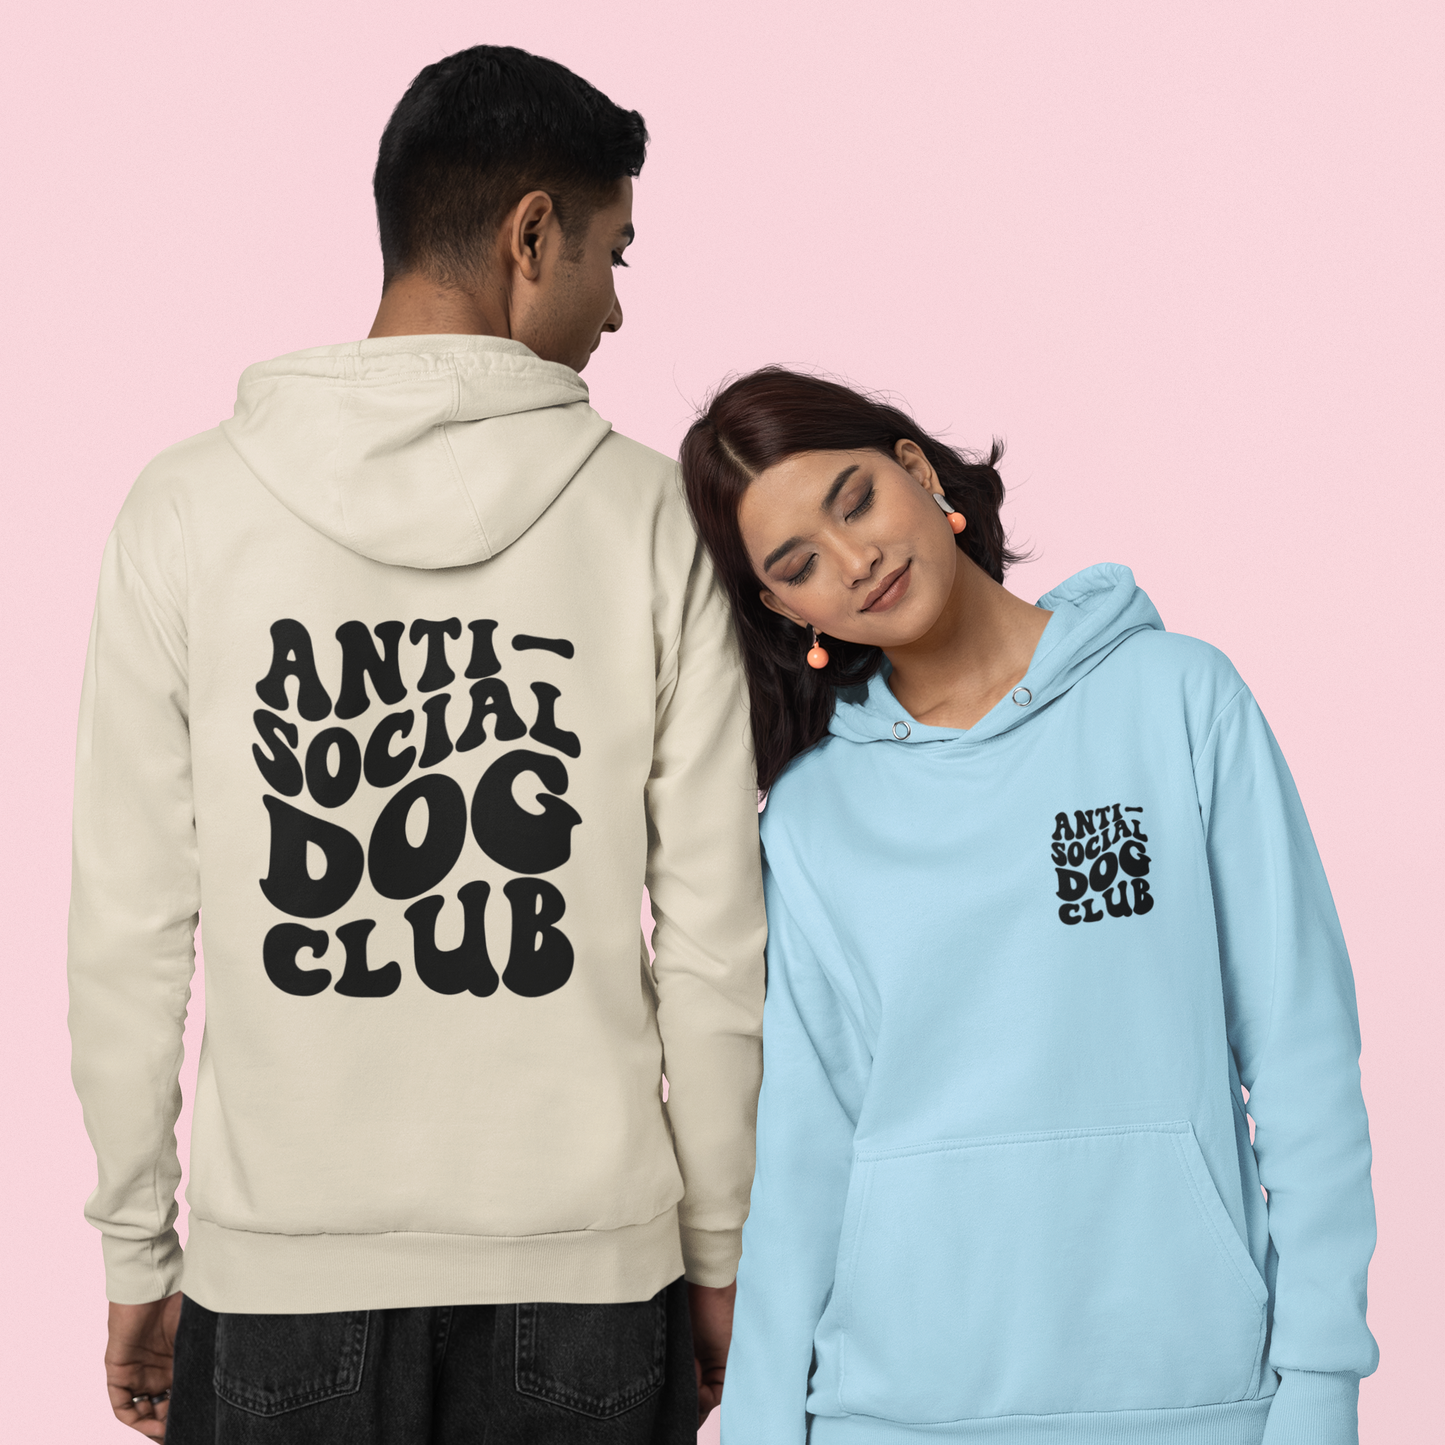 Anti Social Dog Club (Both Side Print)